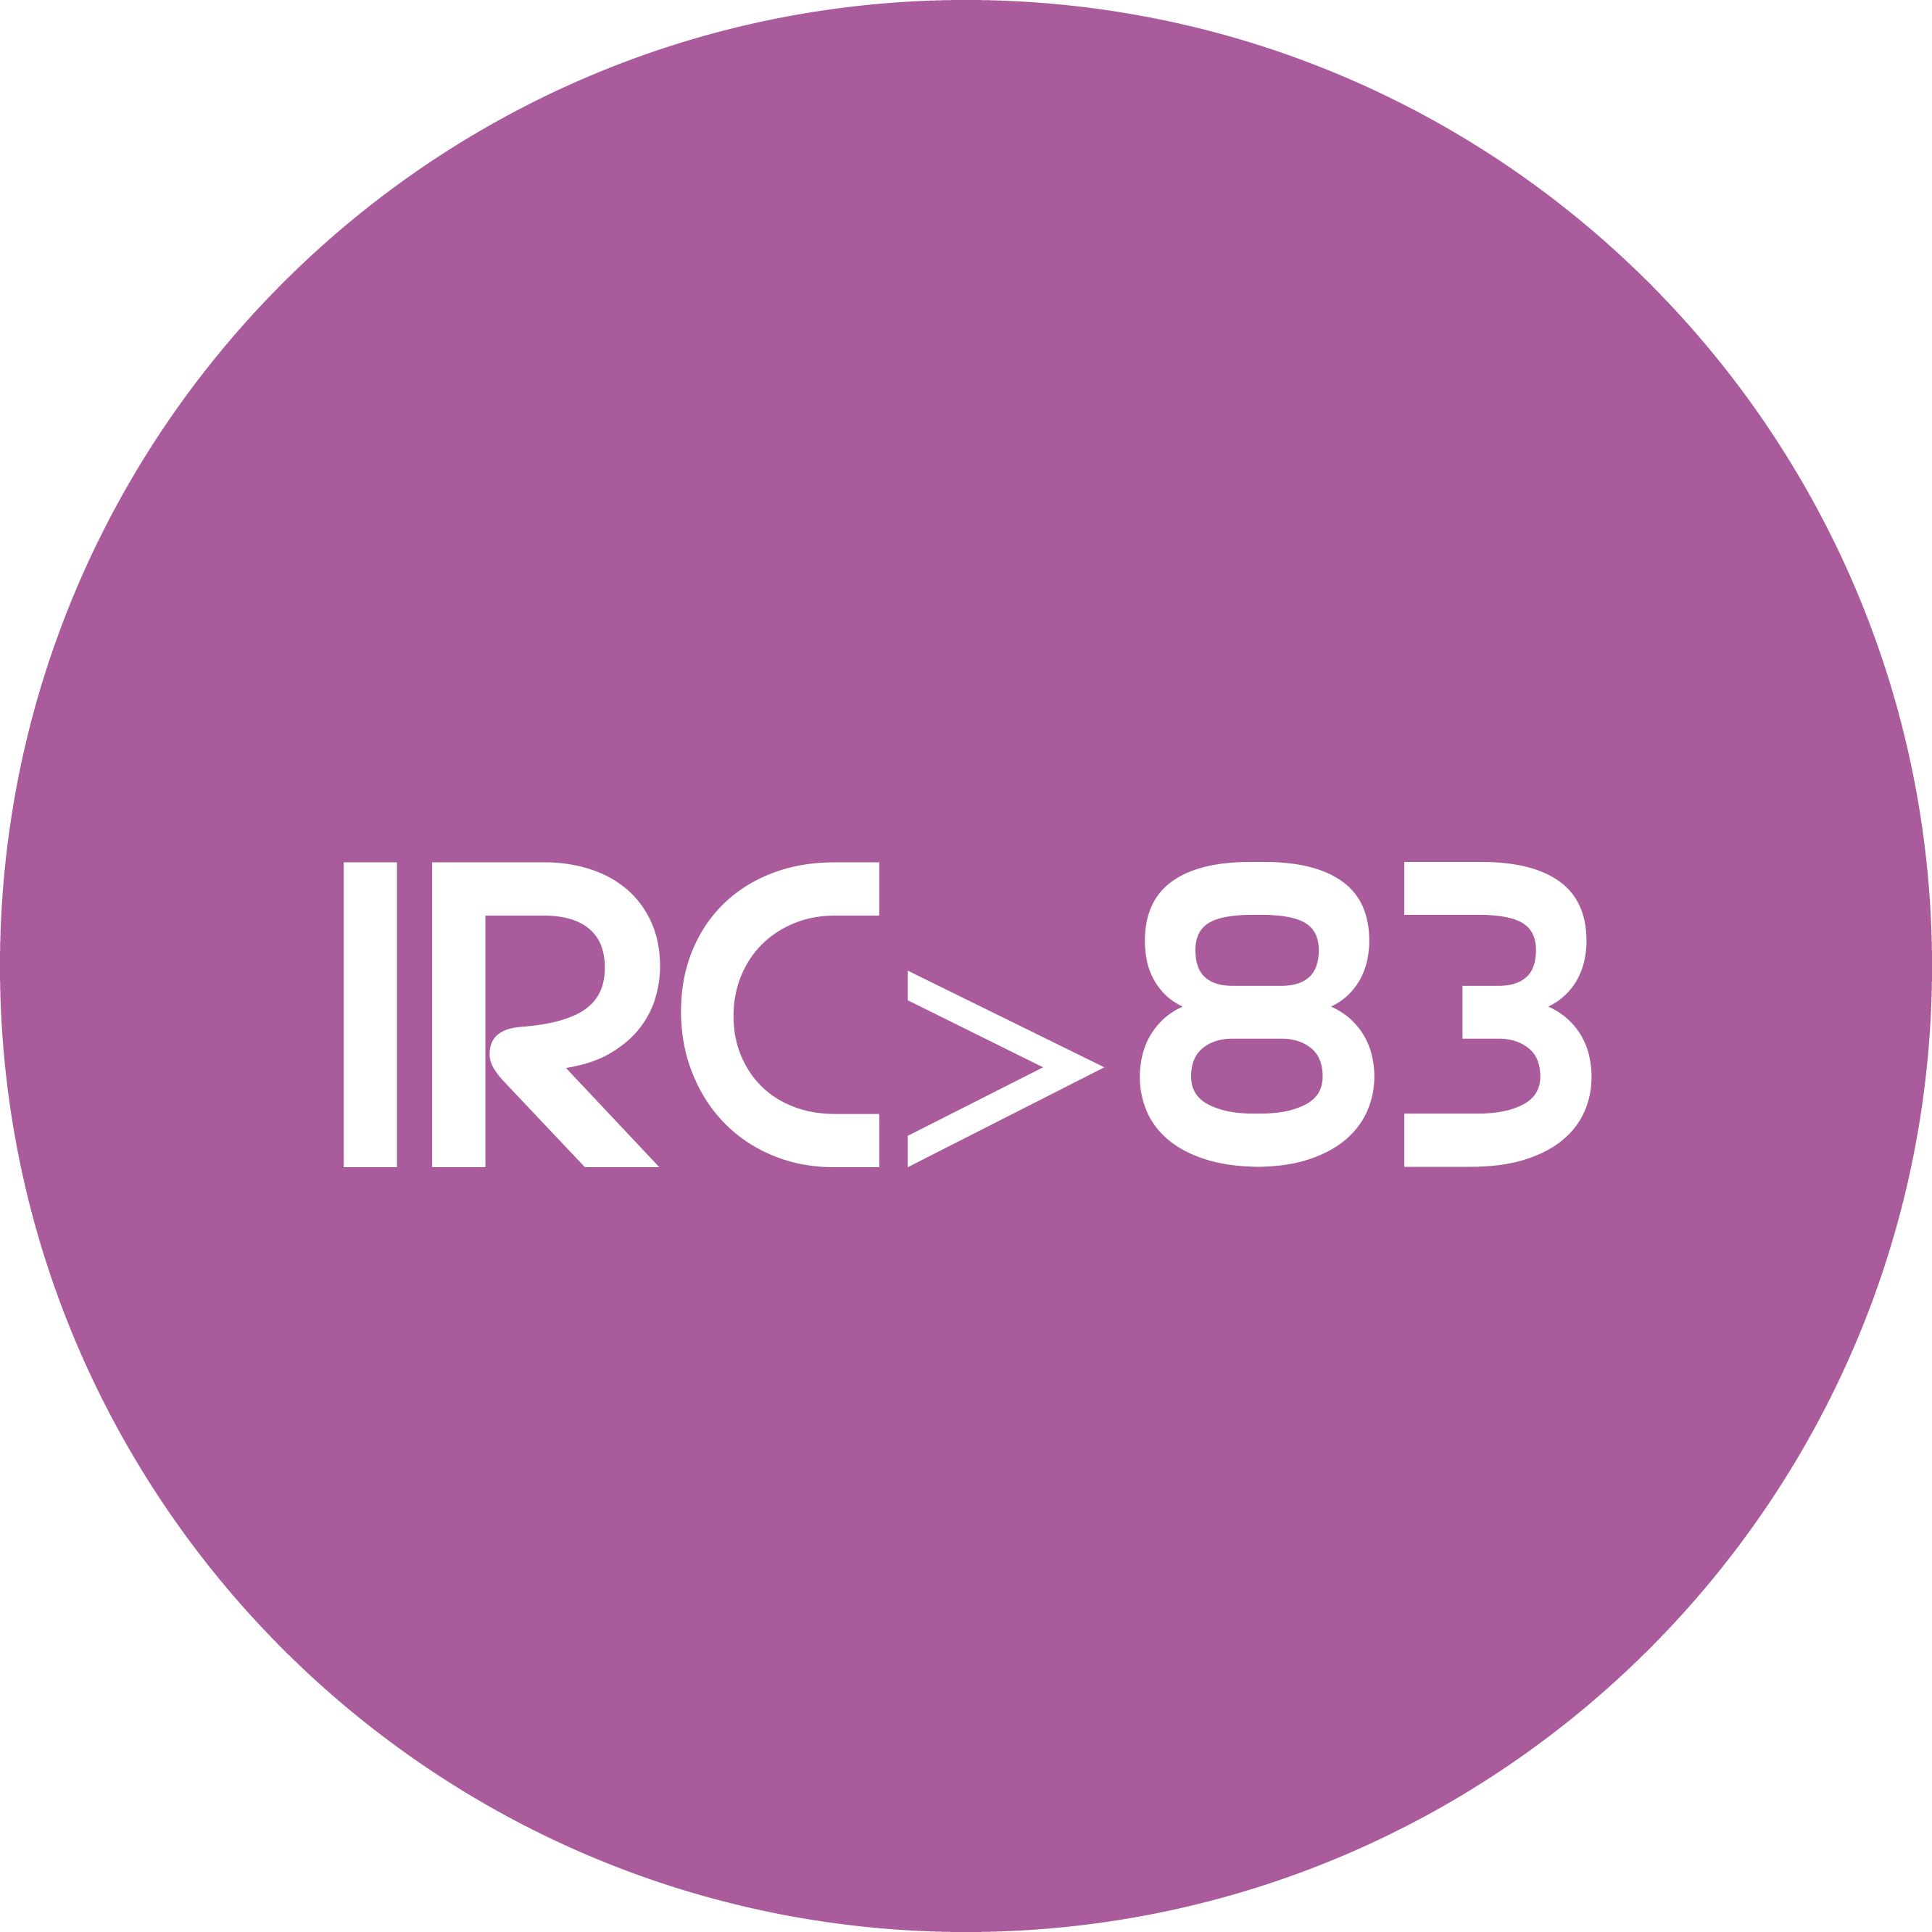 irc83-picto-applique